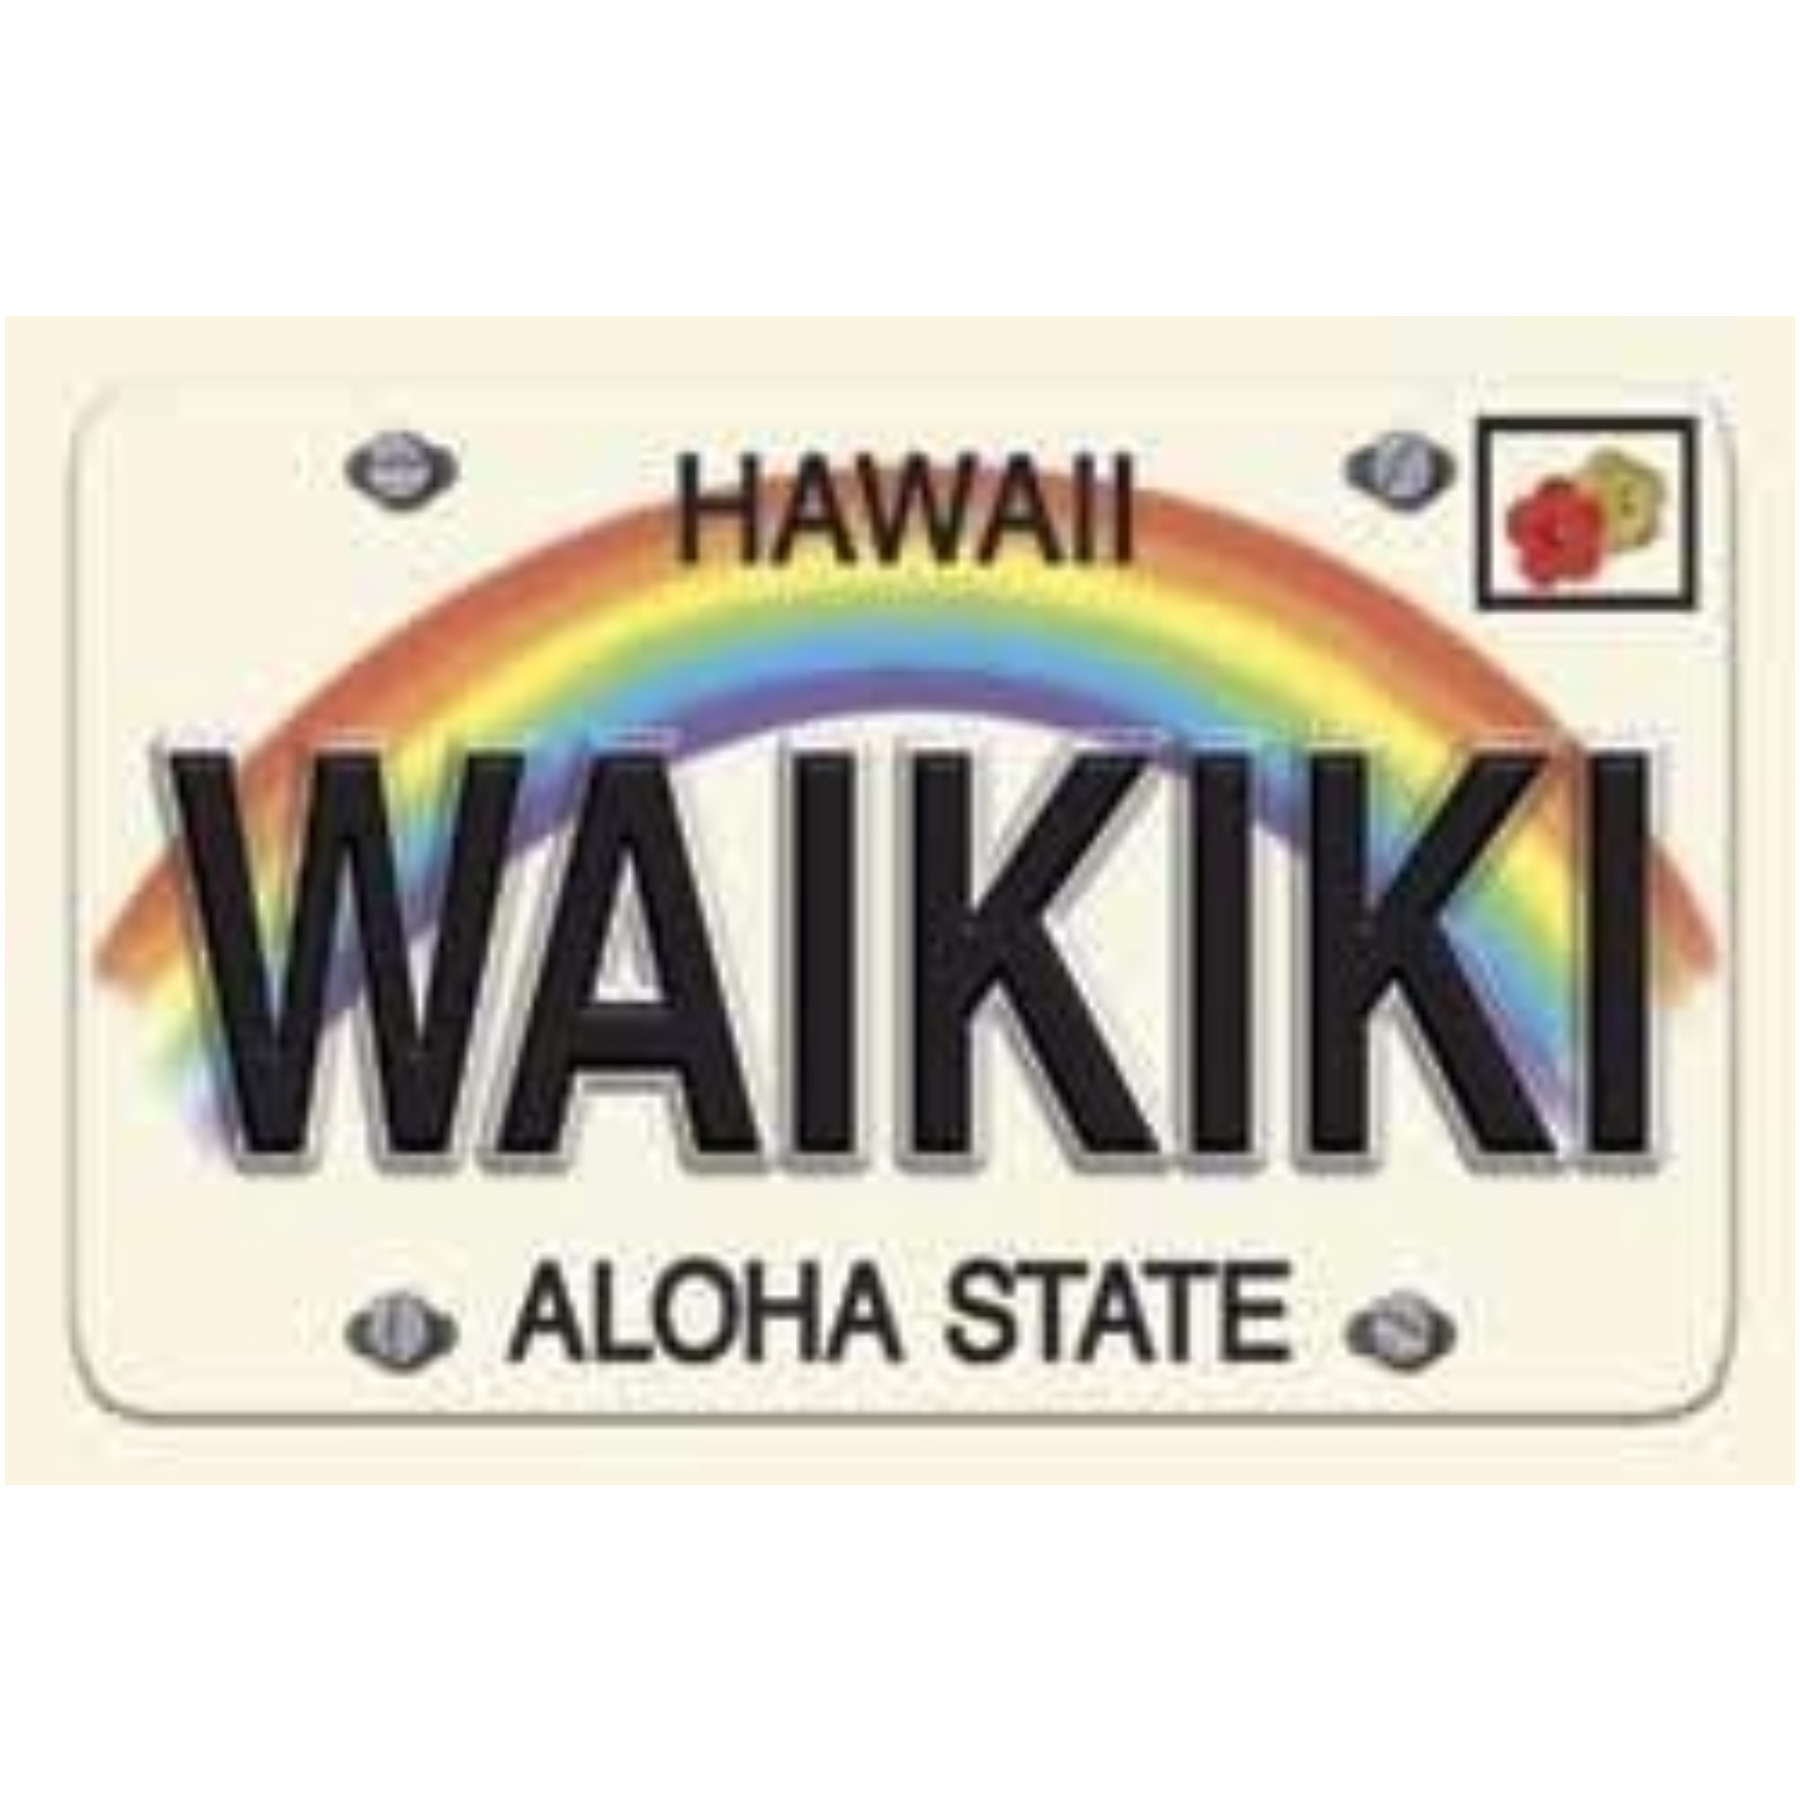 Hawaii Playing Cards Waikiki License Plate - image 1 of 1